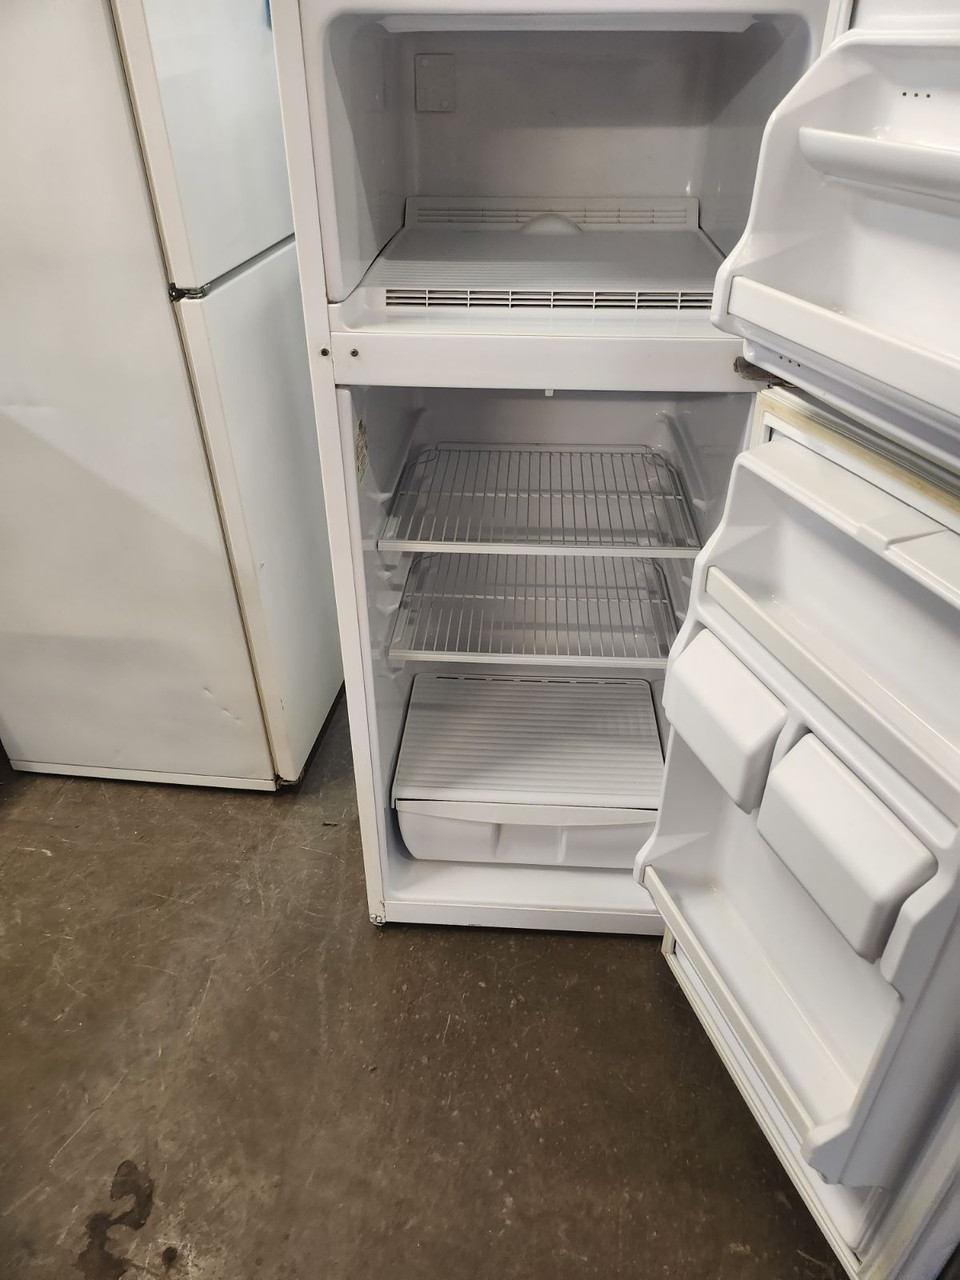 Roper 12 Cubic Refrigerator Top Freezer Automatic Defrost